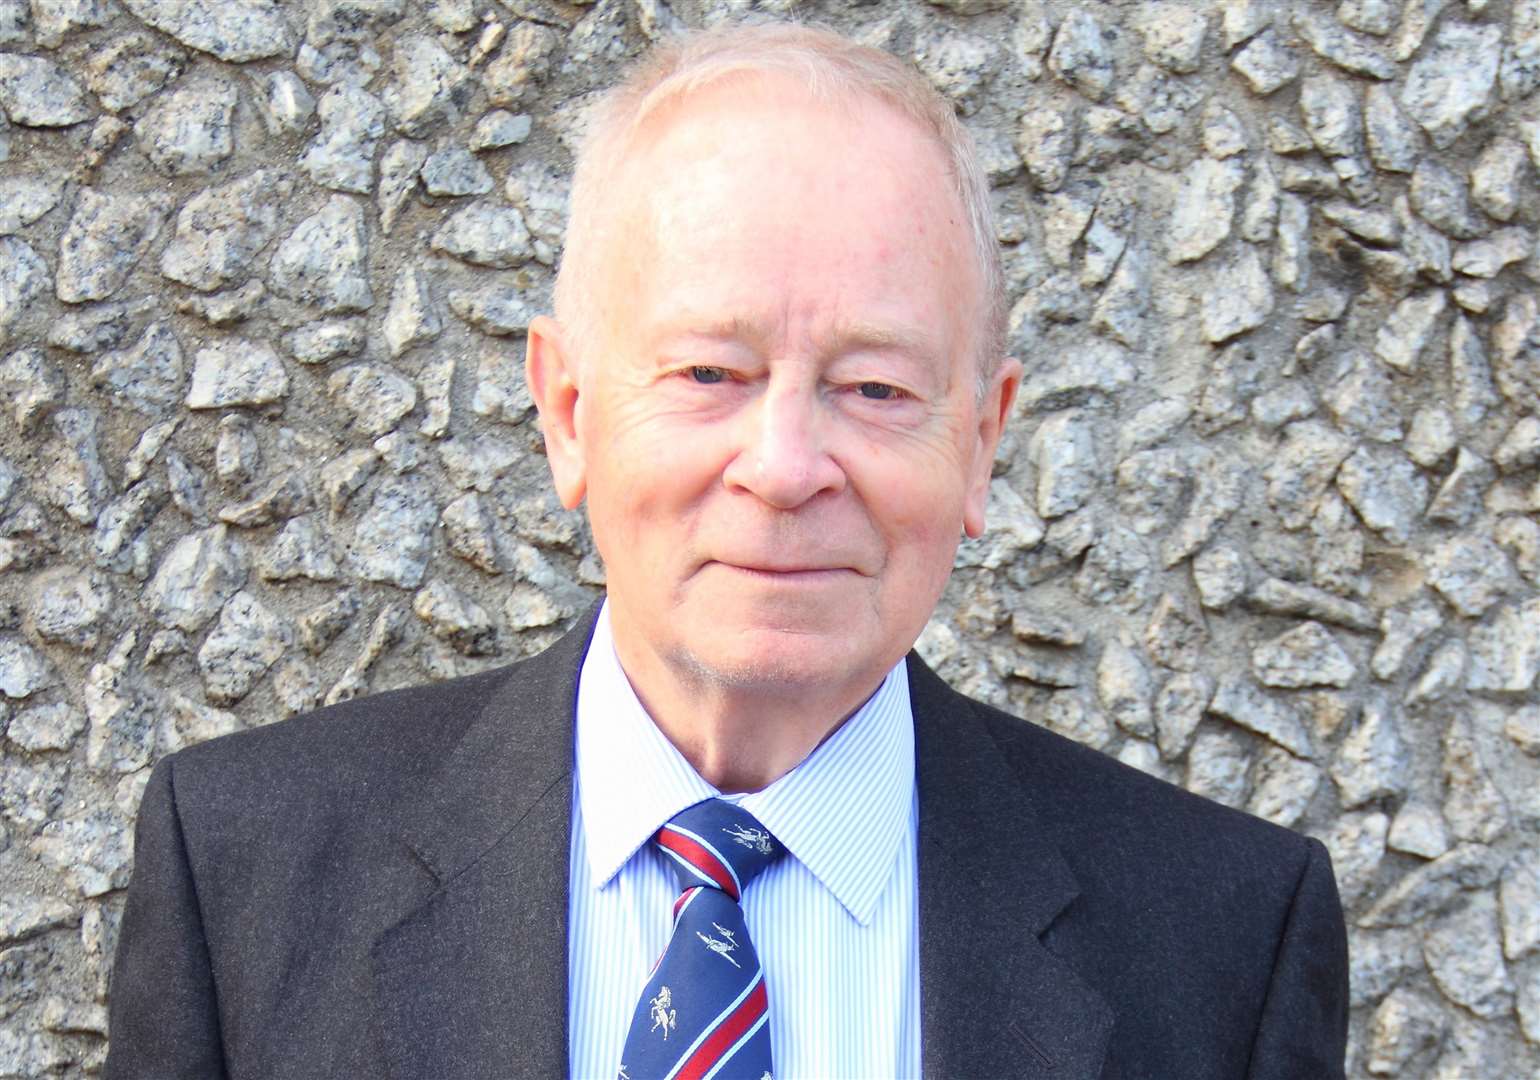 Gravesham council leader David Turner